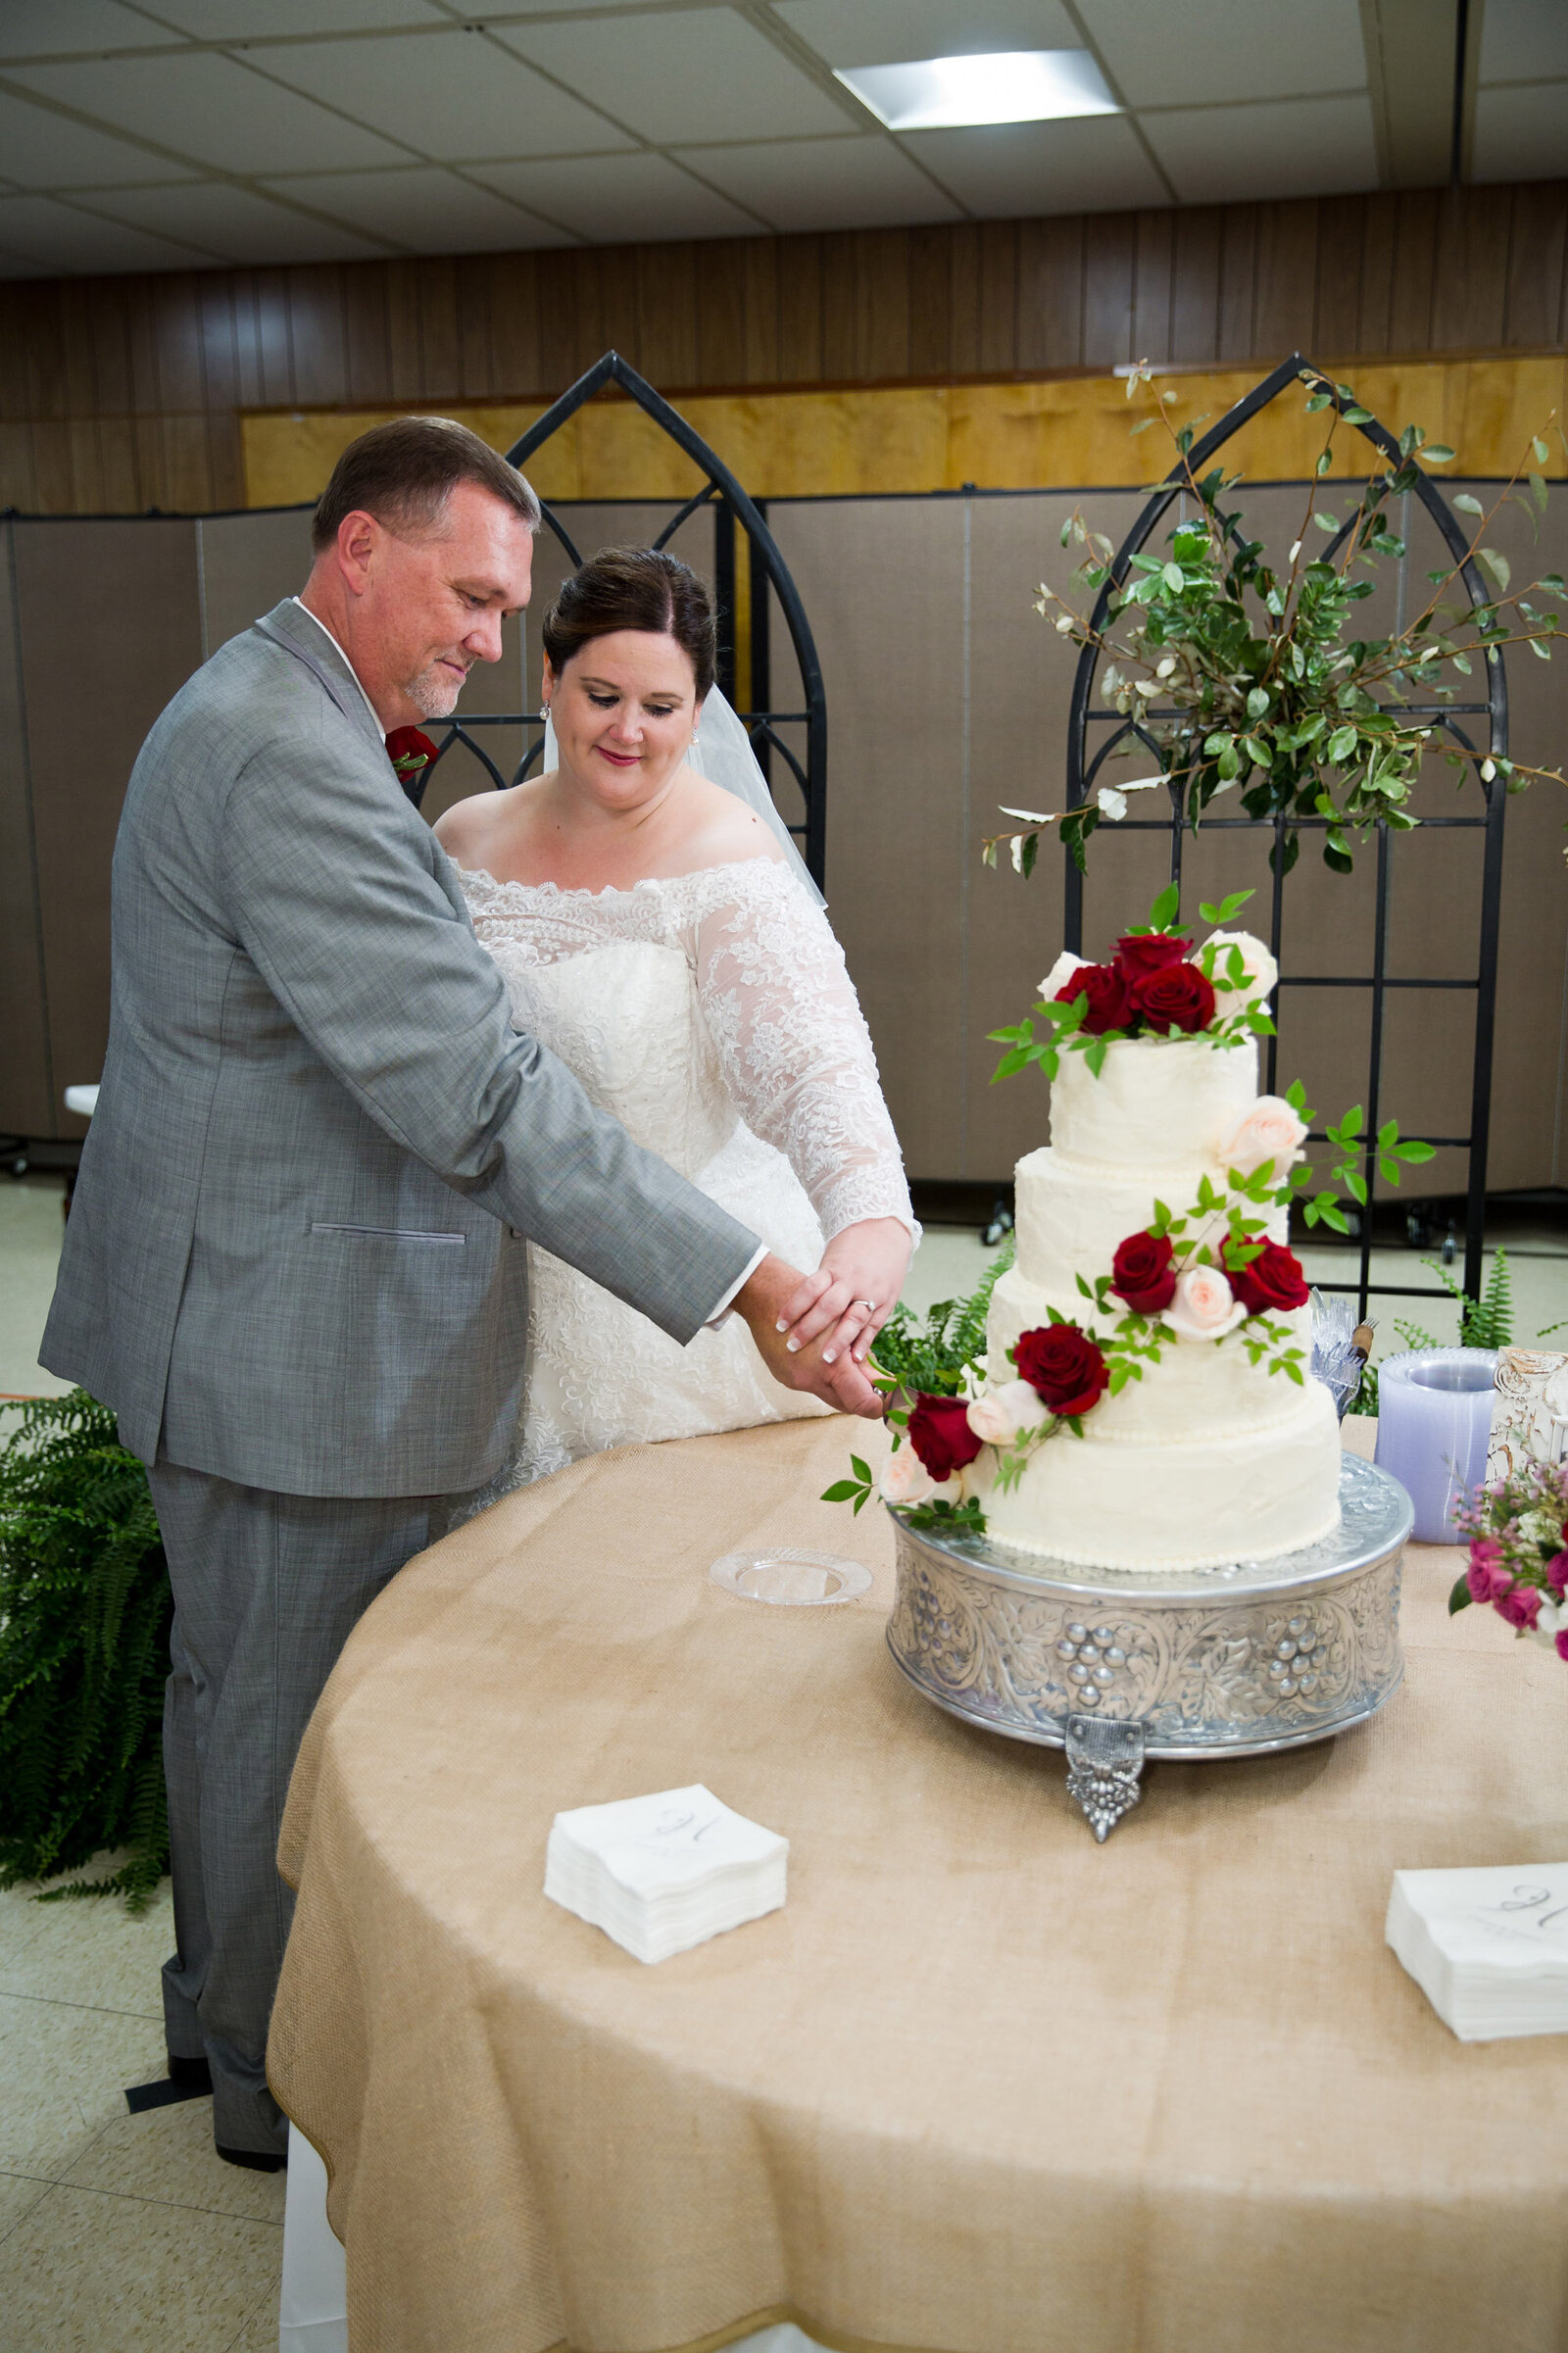 Cake cut bride groom Louisiana wedding church reception